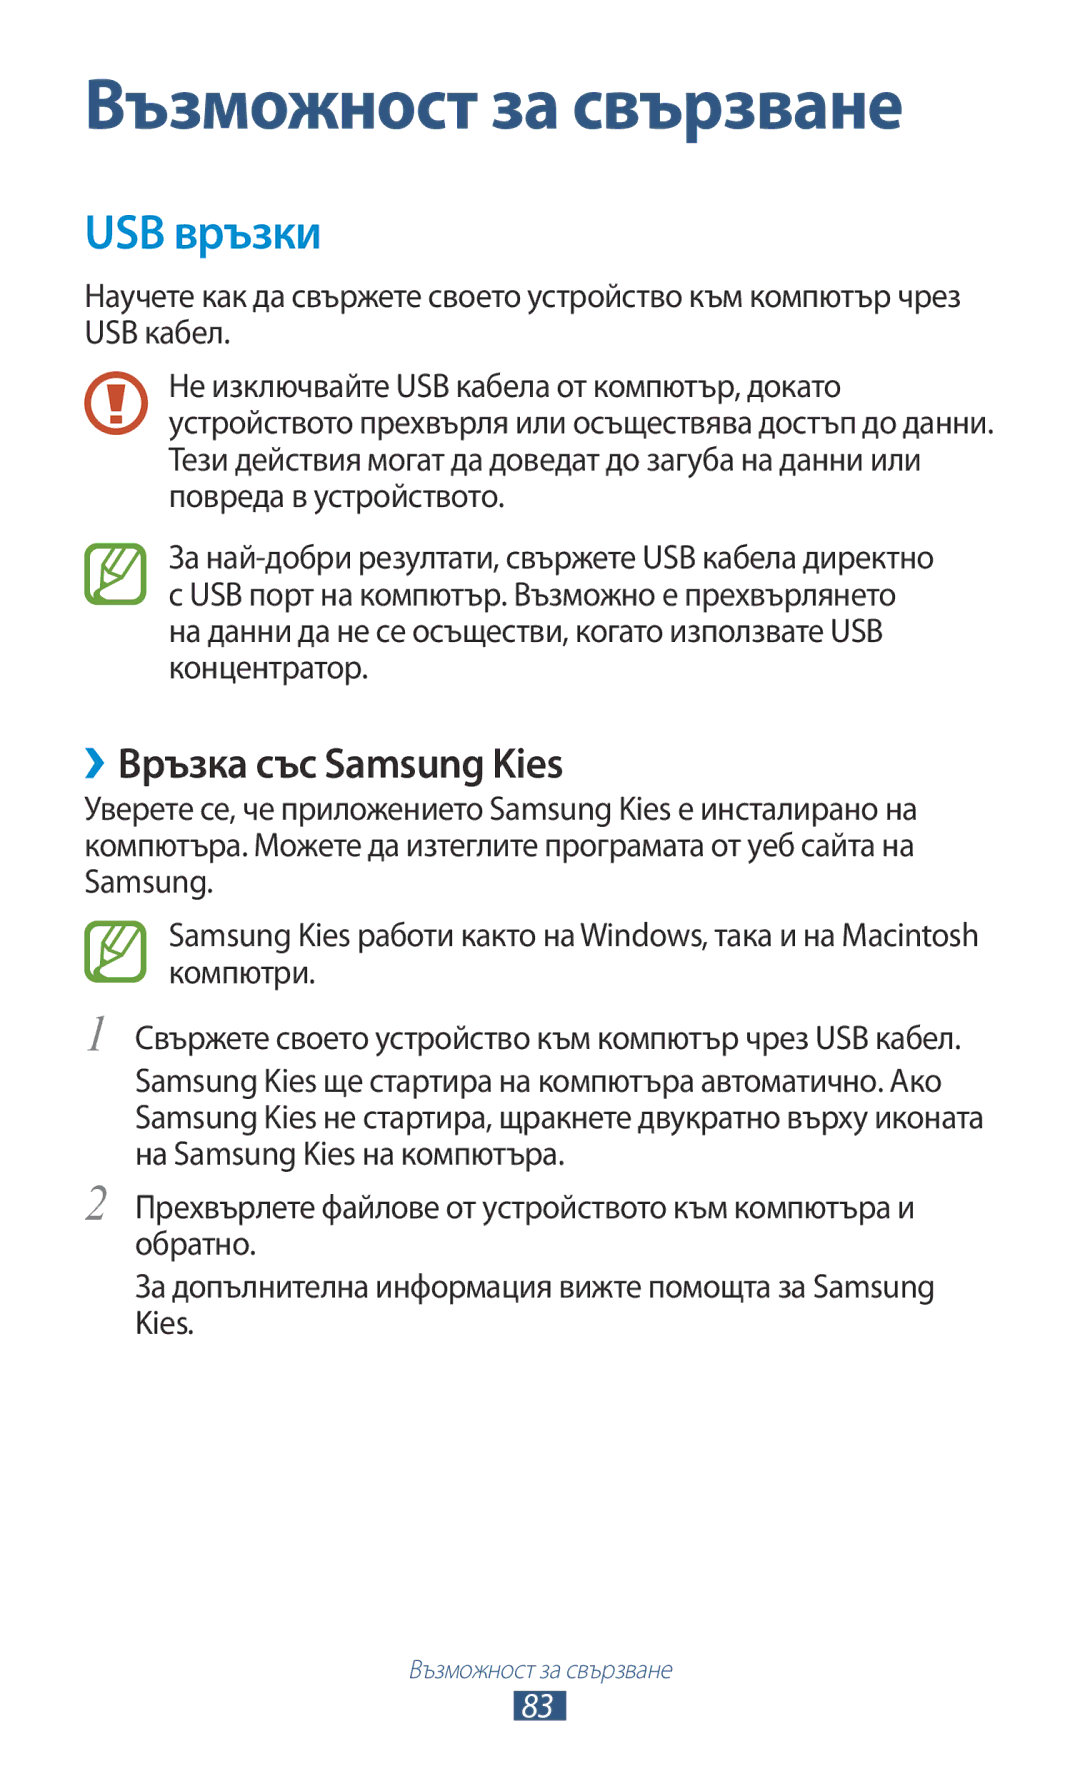 Samsung GT-P3110TSACOA, GT-P3110ZWABGL, GT-P3110TSEBGL, GT-P3110TSABGL, GT-P3110ZWACOA USB връзки, ››Връзка със Samsung Kies 